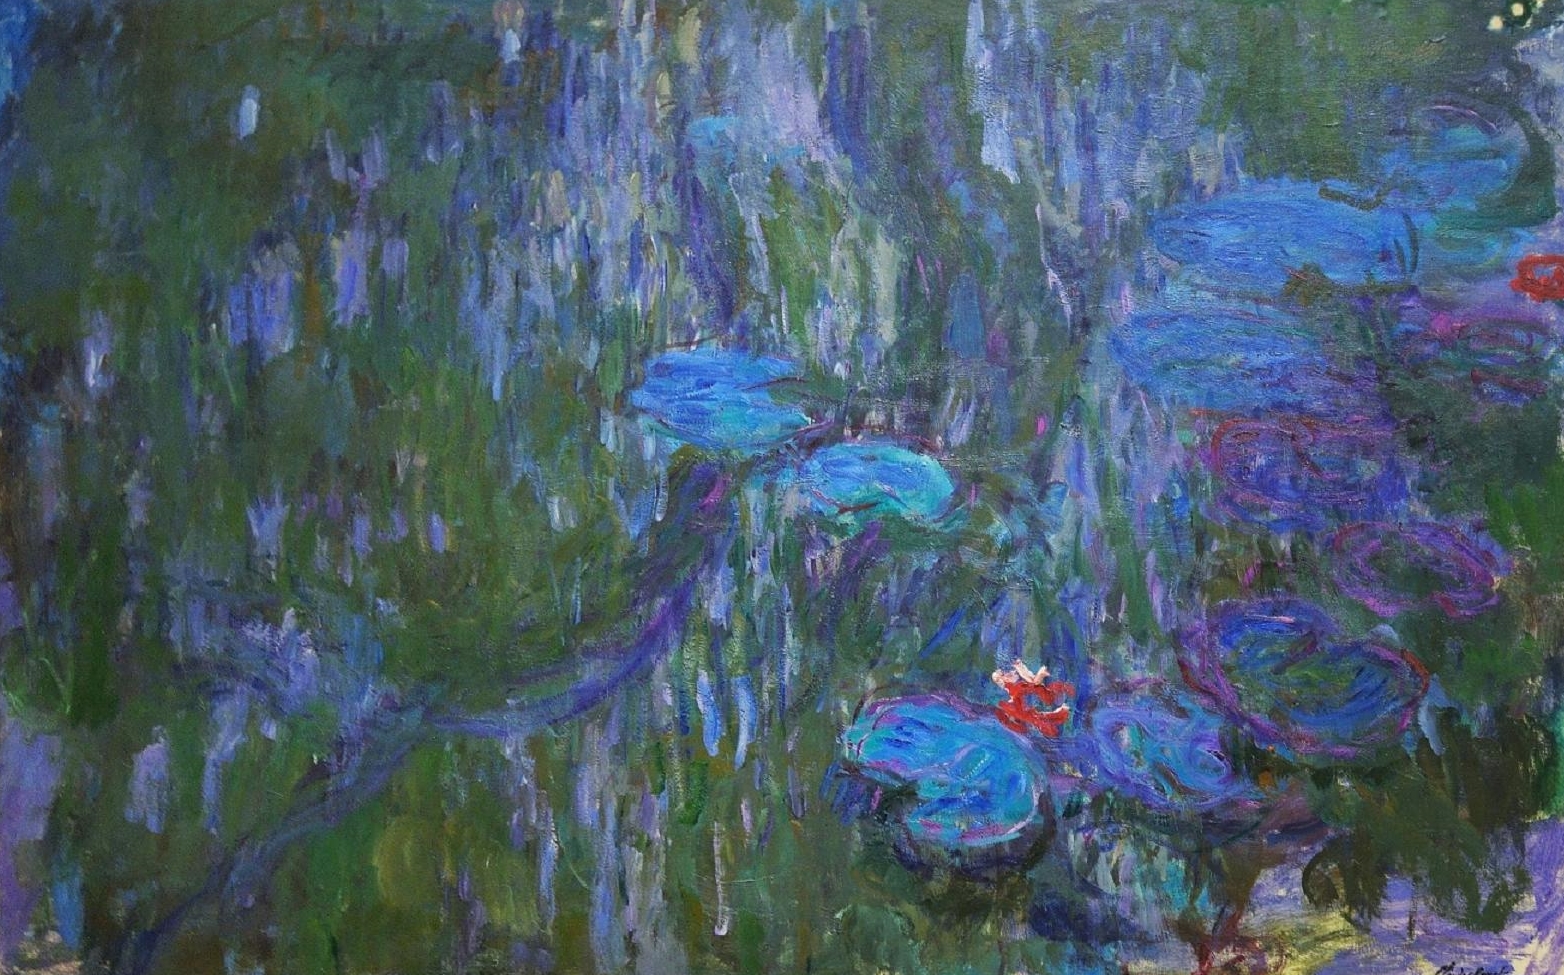 Claude+Monet-1840-1926 (546).jpg